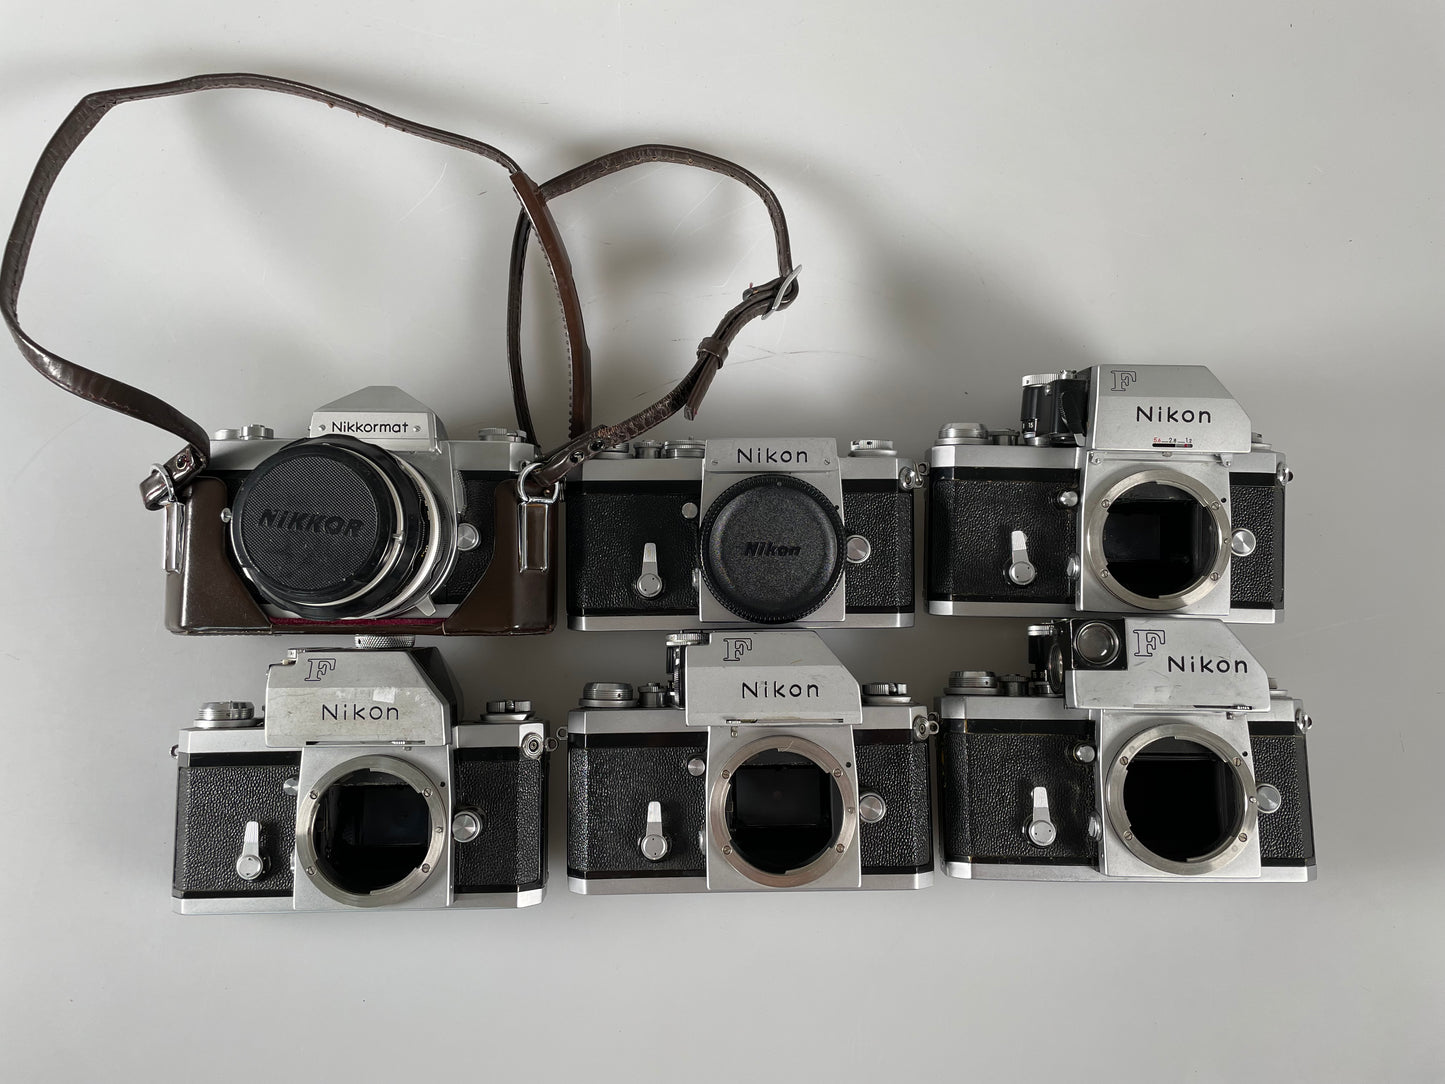 Lot of 6 Nikon film camera bodies Nikon F, Nikkormat, 1 lens 50mm f1.4